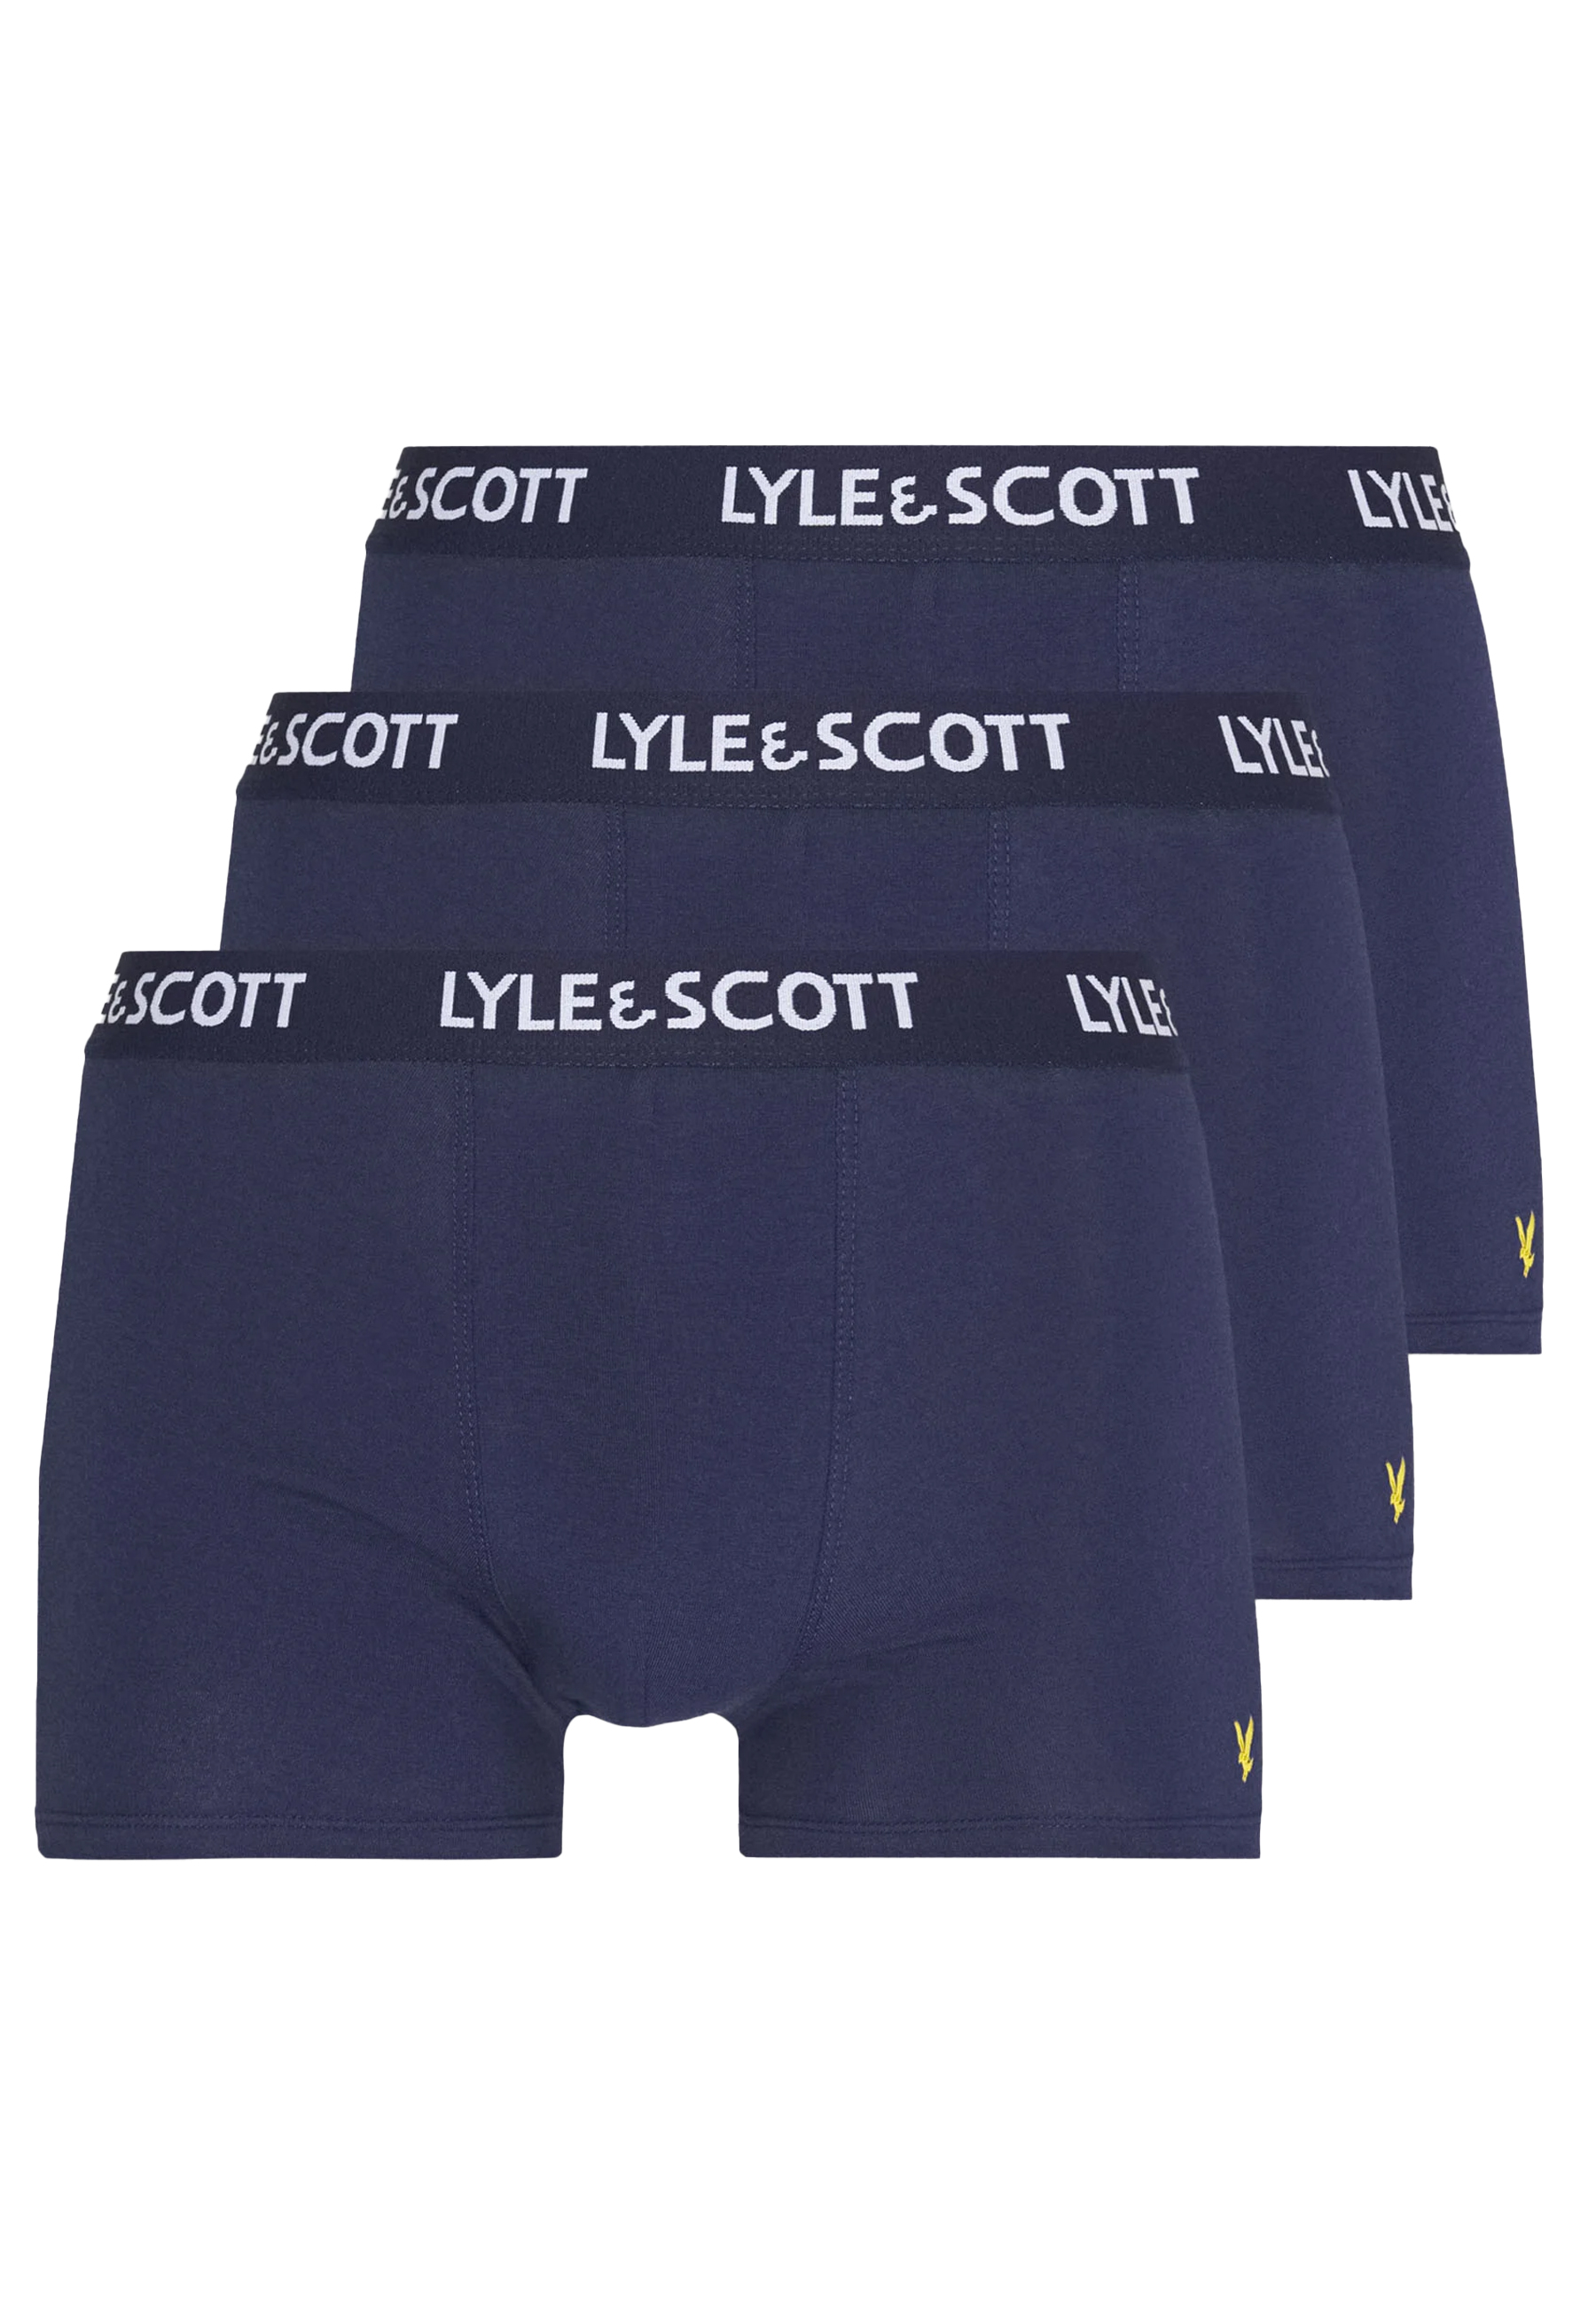 Lyle & Scott boxershorts donkerblauw Heren maat XL